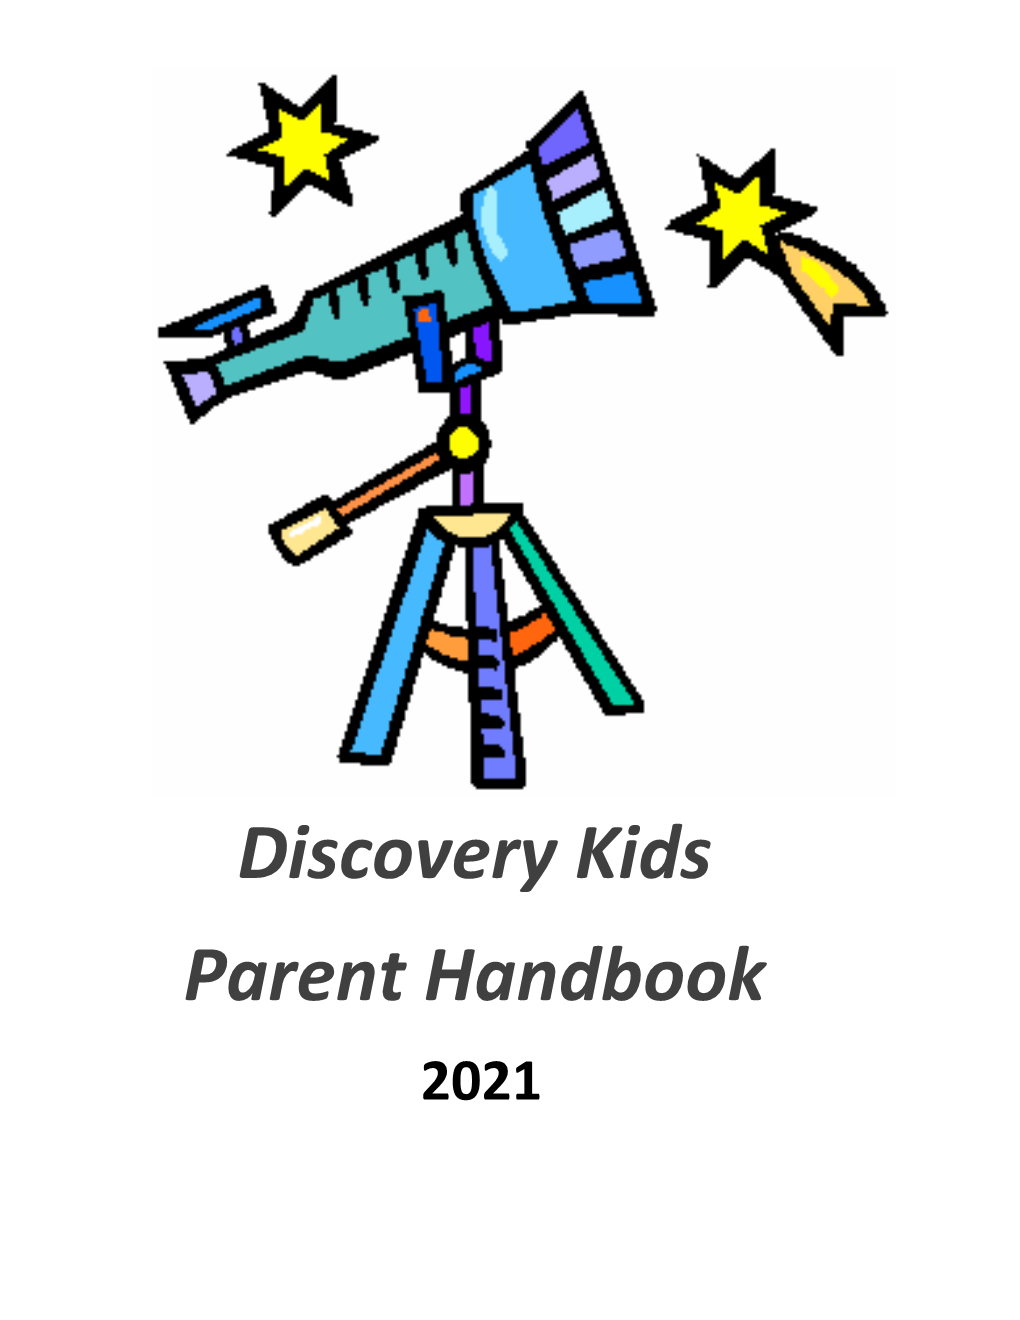 Discovery Kids Parent Handbook 2021